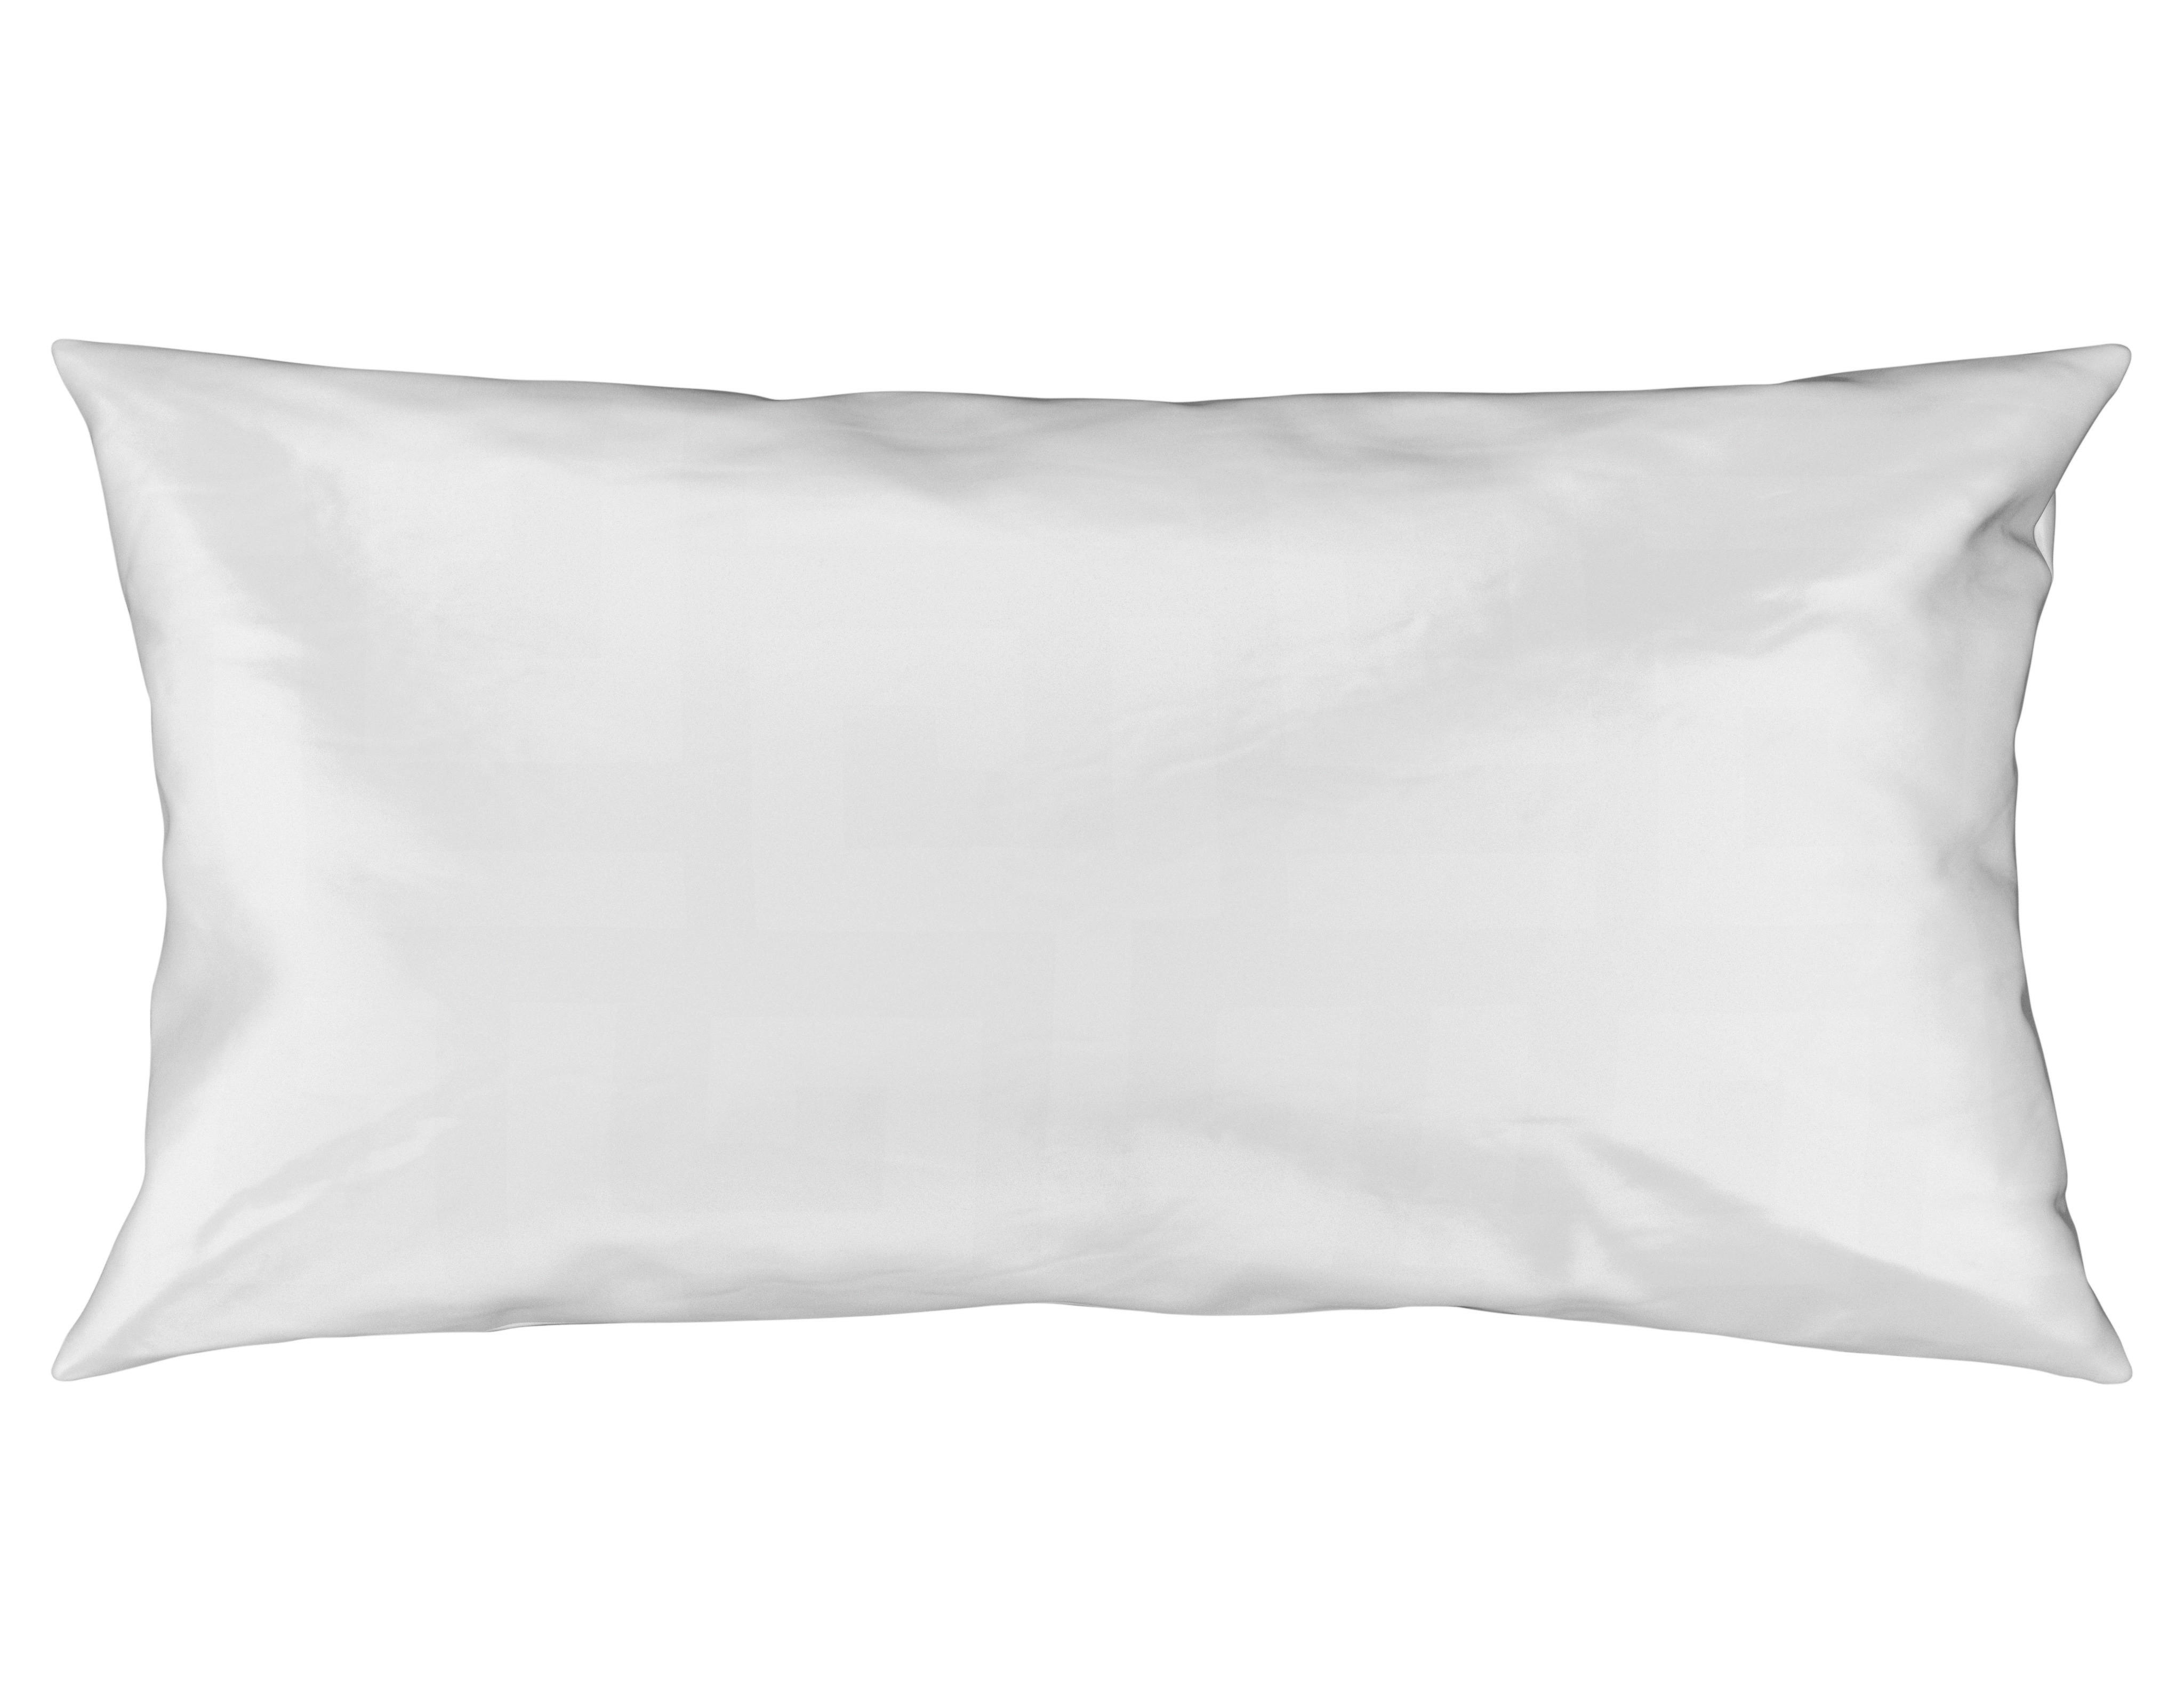 KISSENHÜLLEN-SET 40/80 cm  - Weiß, Basics, Textil (40/80cm) - Bio:Vio